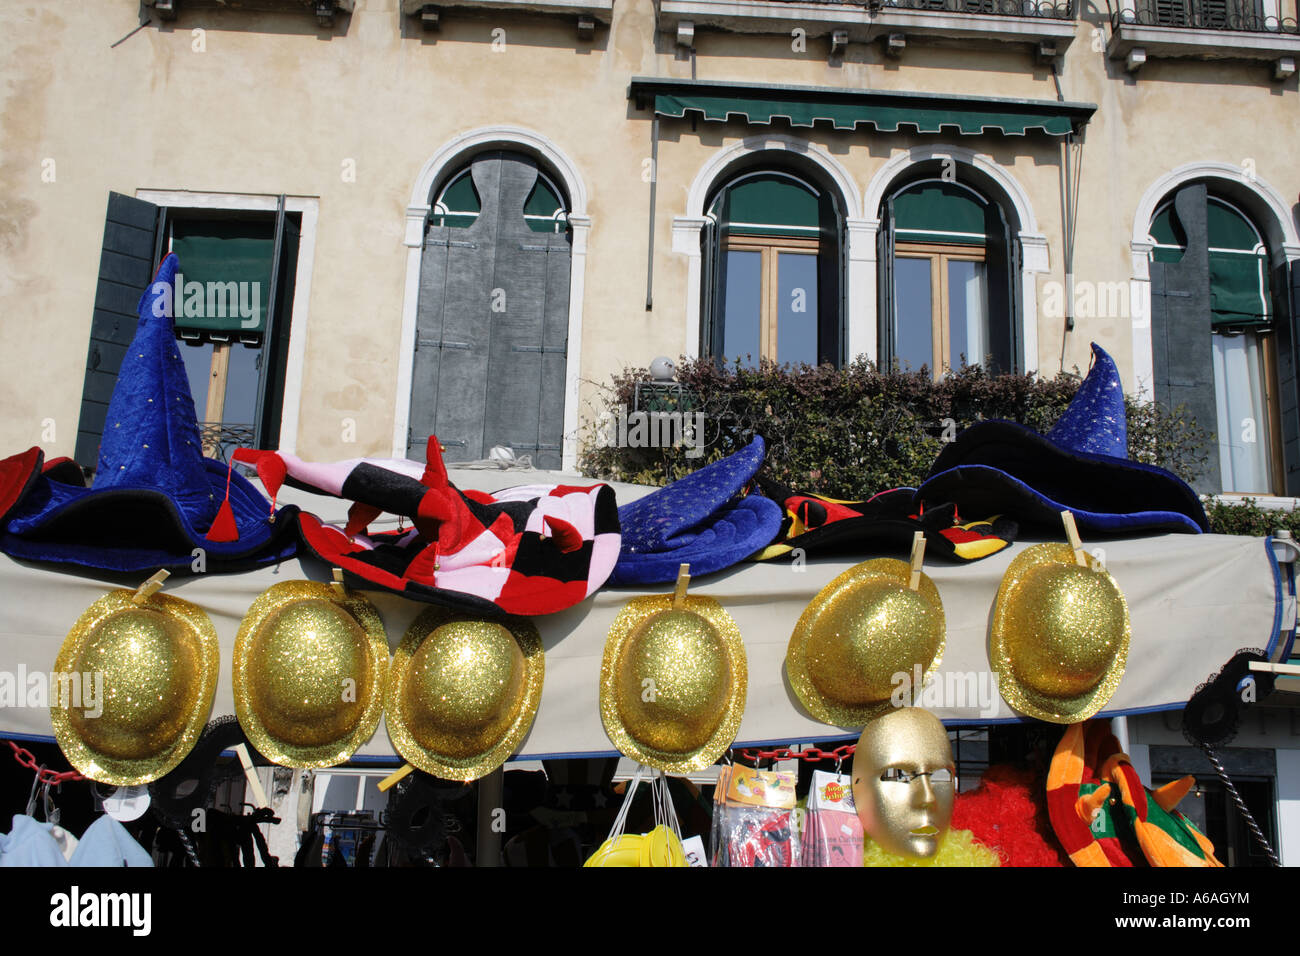 Souvenir shop, Carnival Venice, Italy, Europe. Photo by Willy Matheisl Stock Photo